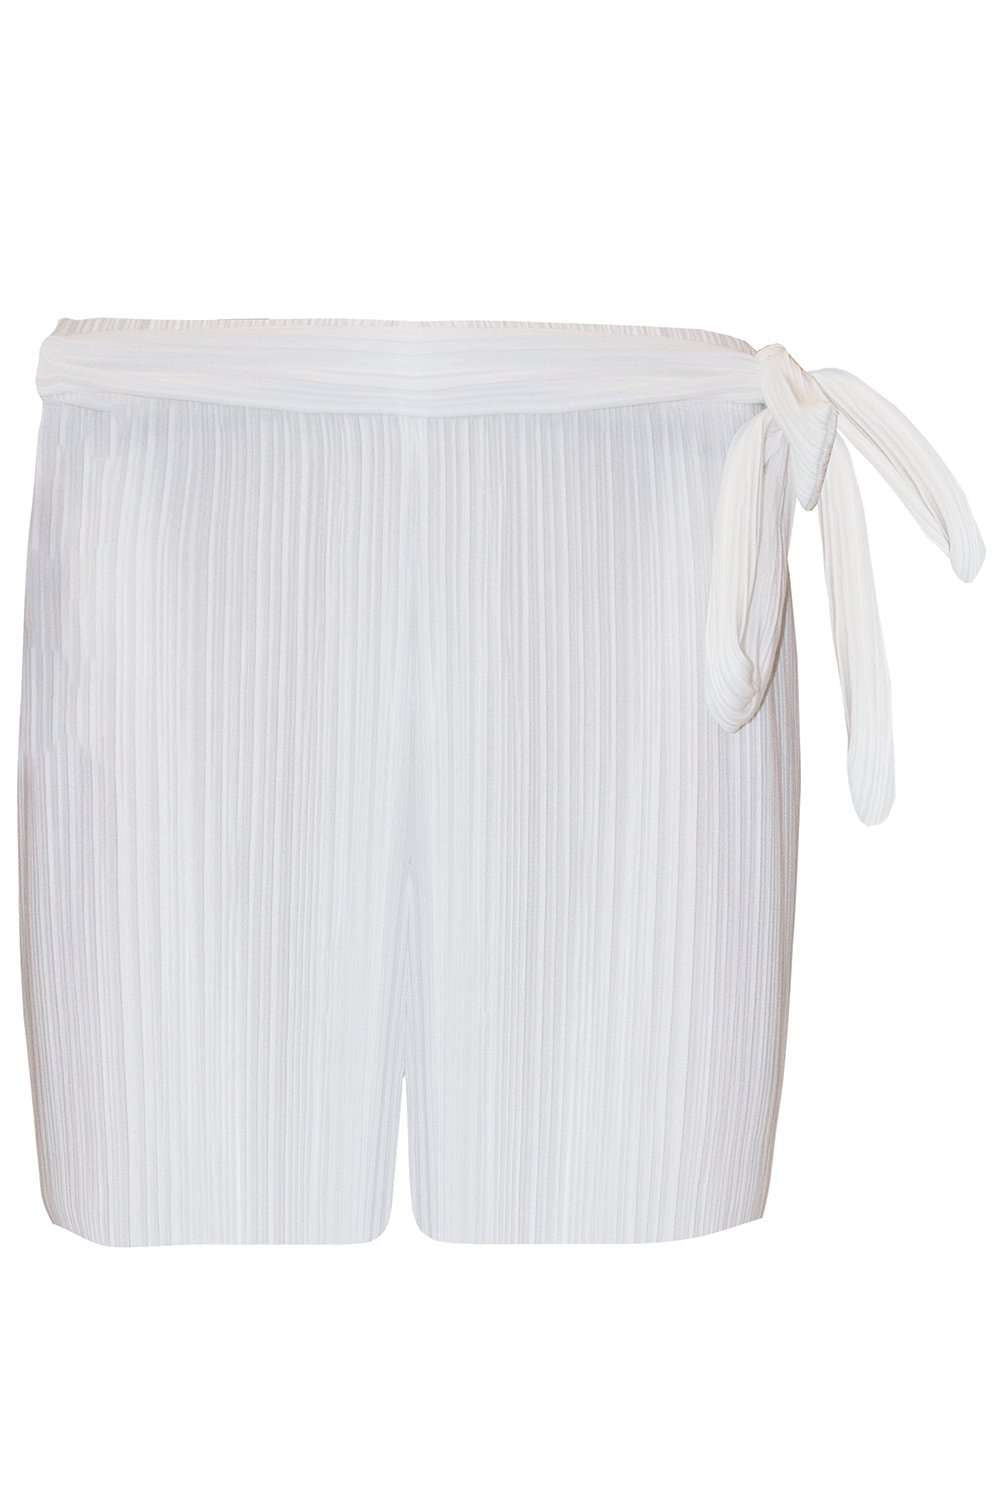 Nikki High Waisted Paper Bag Pleated Shorts - bejealous-com